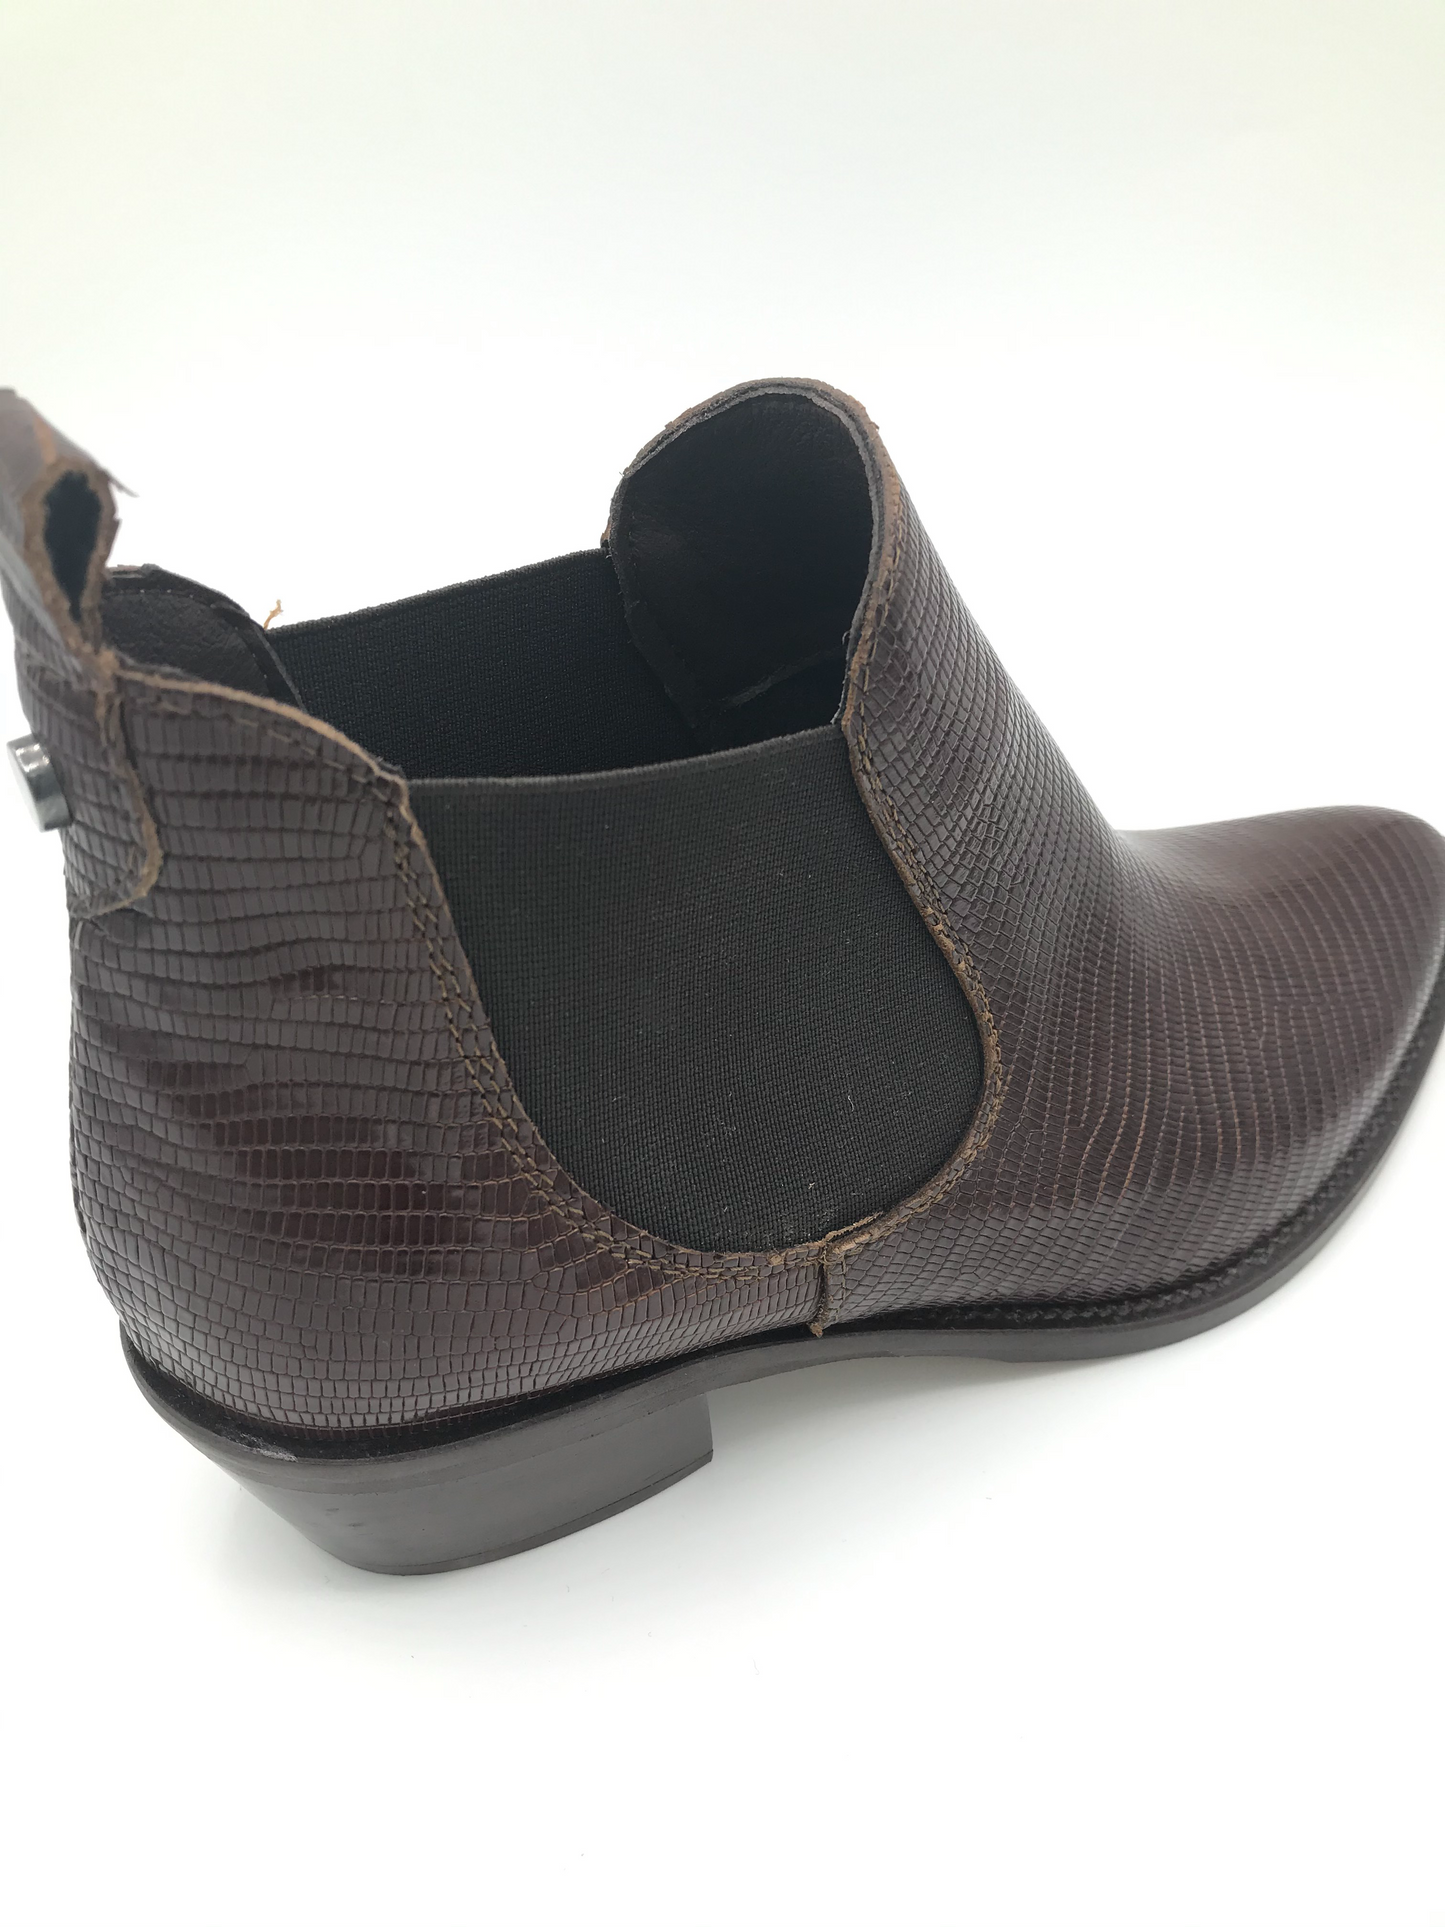 Alpe 4010 brandy snake effect Chelsea slip on boot - Imeldas Shoes Norwich